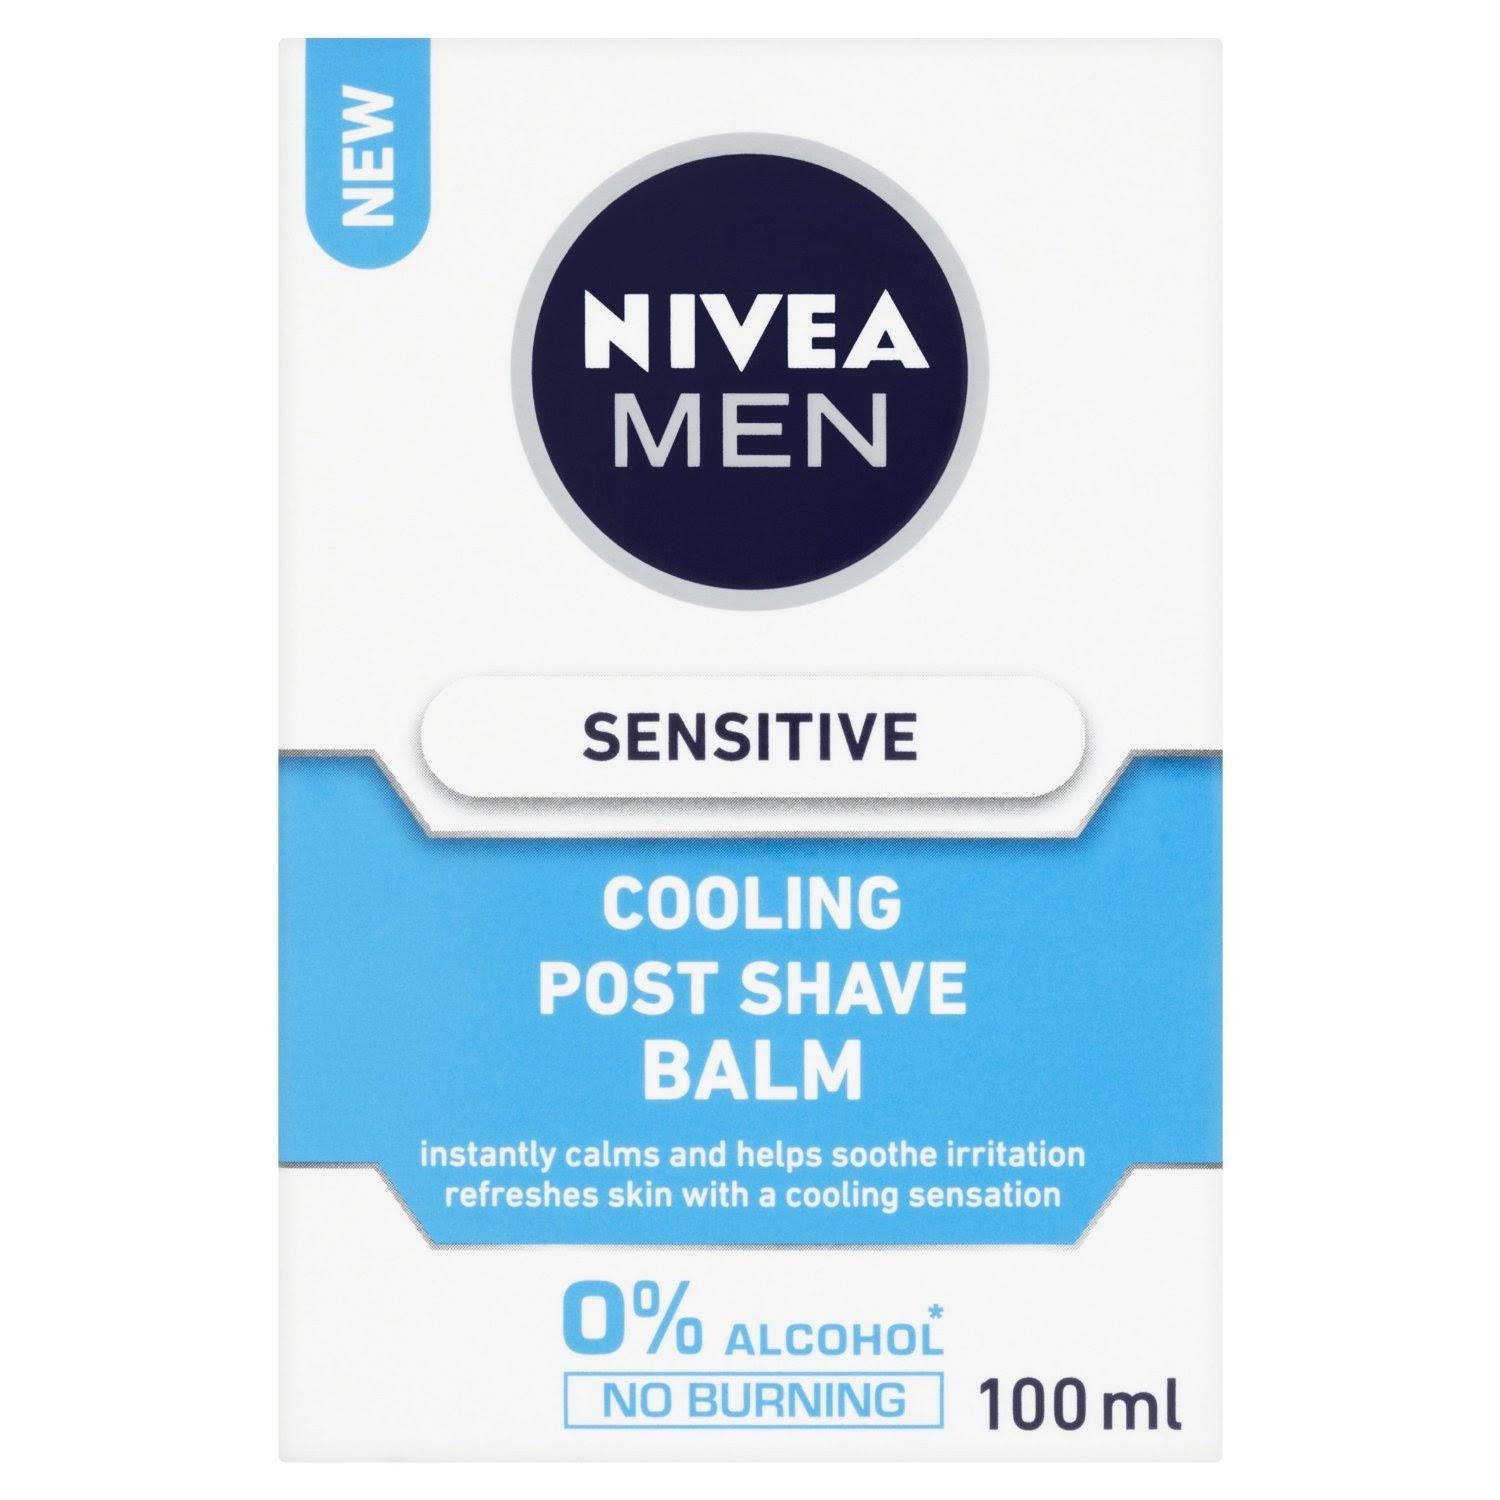 Nivea Men Sensitive Cooling Balm - 100ml